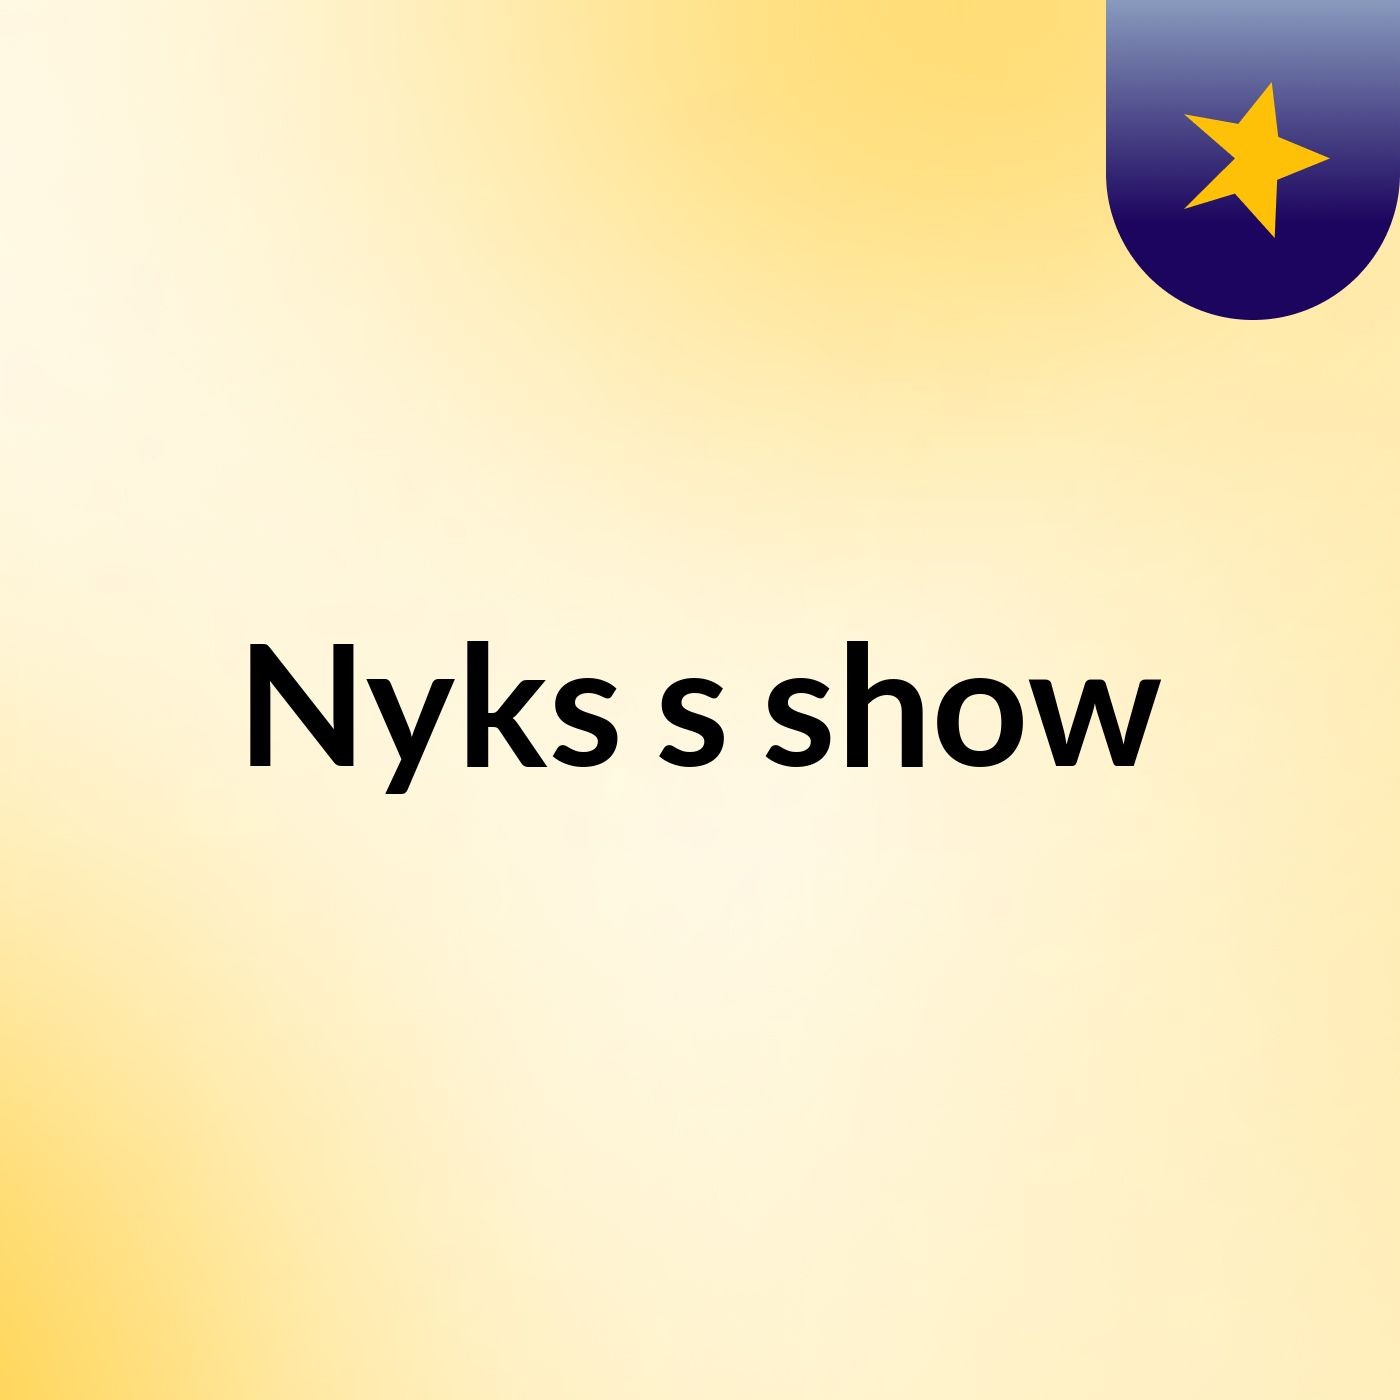 Nyks's show